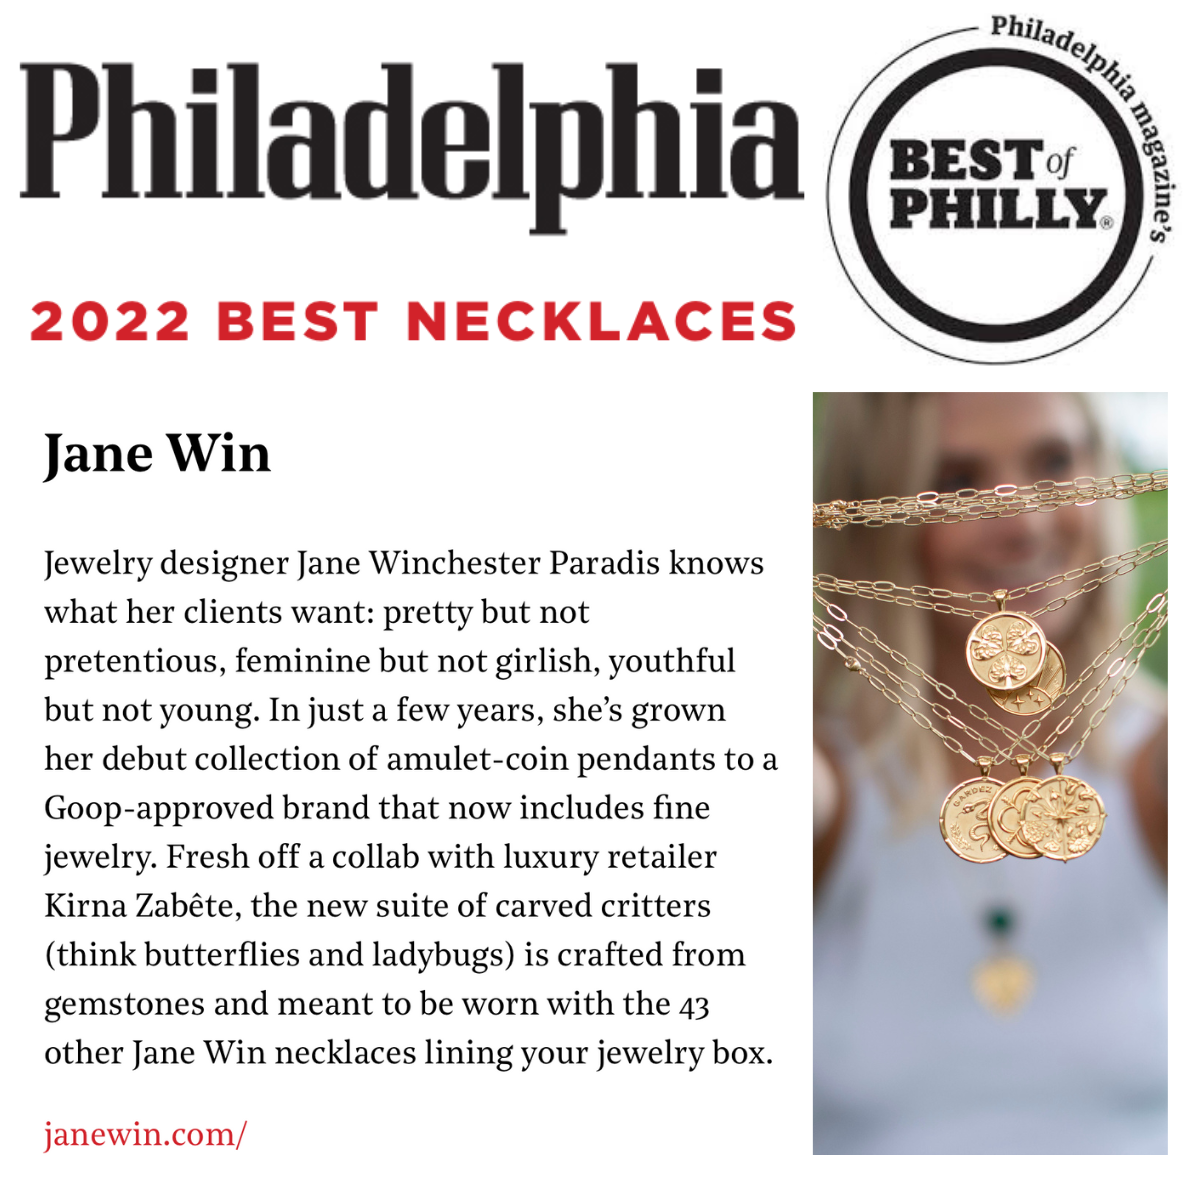 Philadelphia Magazine's Best of Philly 2022: Jane Win wins Best Necklace